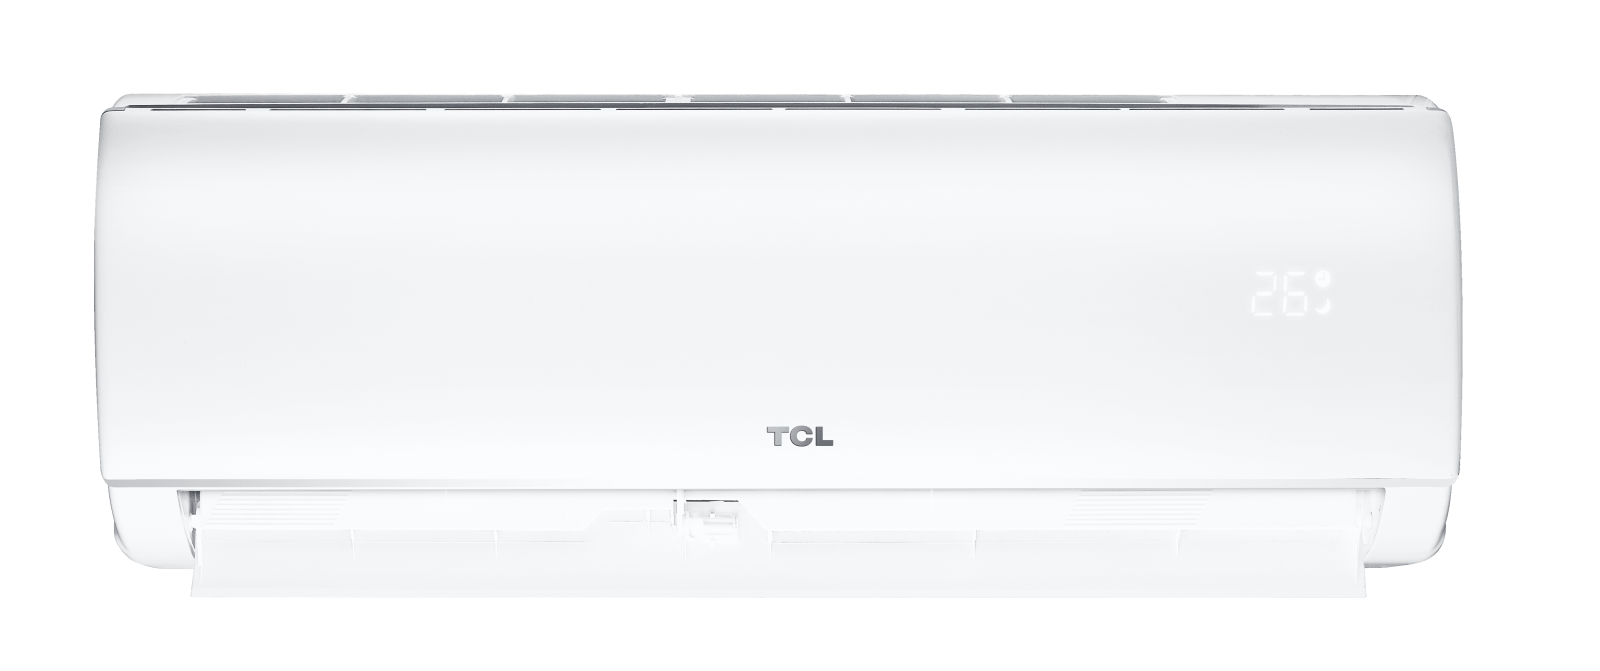 Aparat de aer conditionat TCL Elite TAC-12CHSD/XA41IFP + Kit instalare inclus (3m), 12000 BTU, Clasa A++/A+, Wi-Fi Control TCL Home App, Incalzire, Turbo, ECO, I-Feel, Sleep, Alb